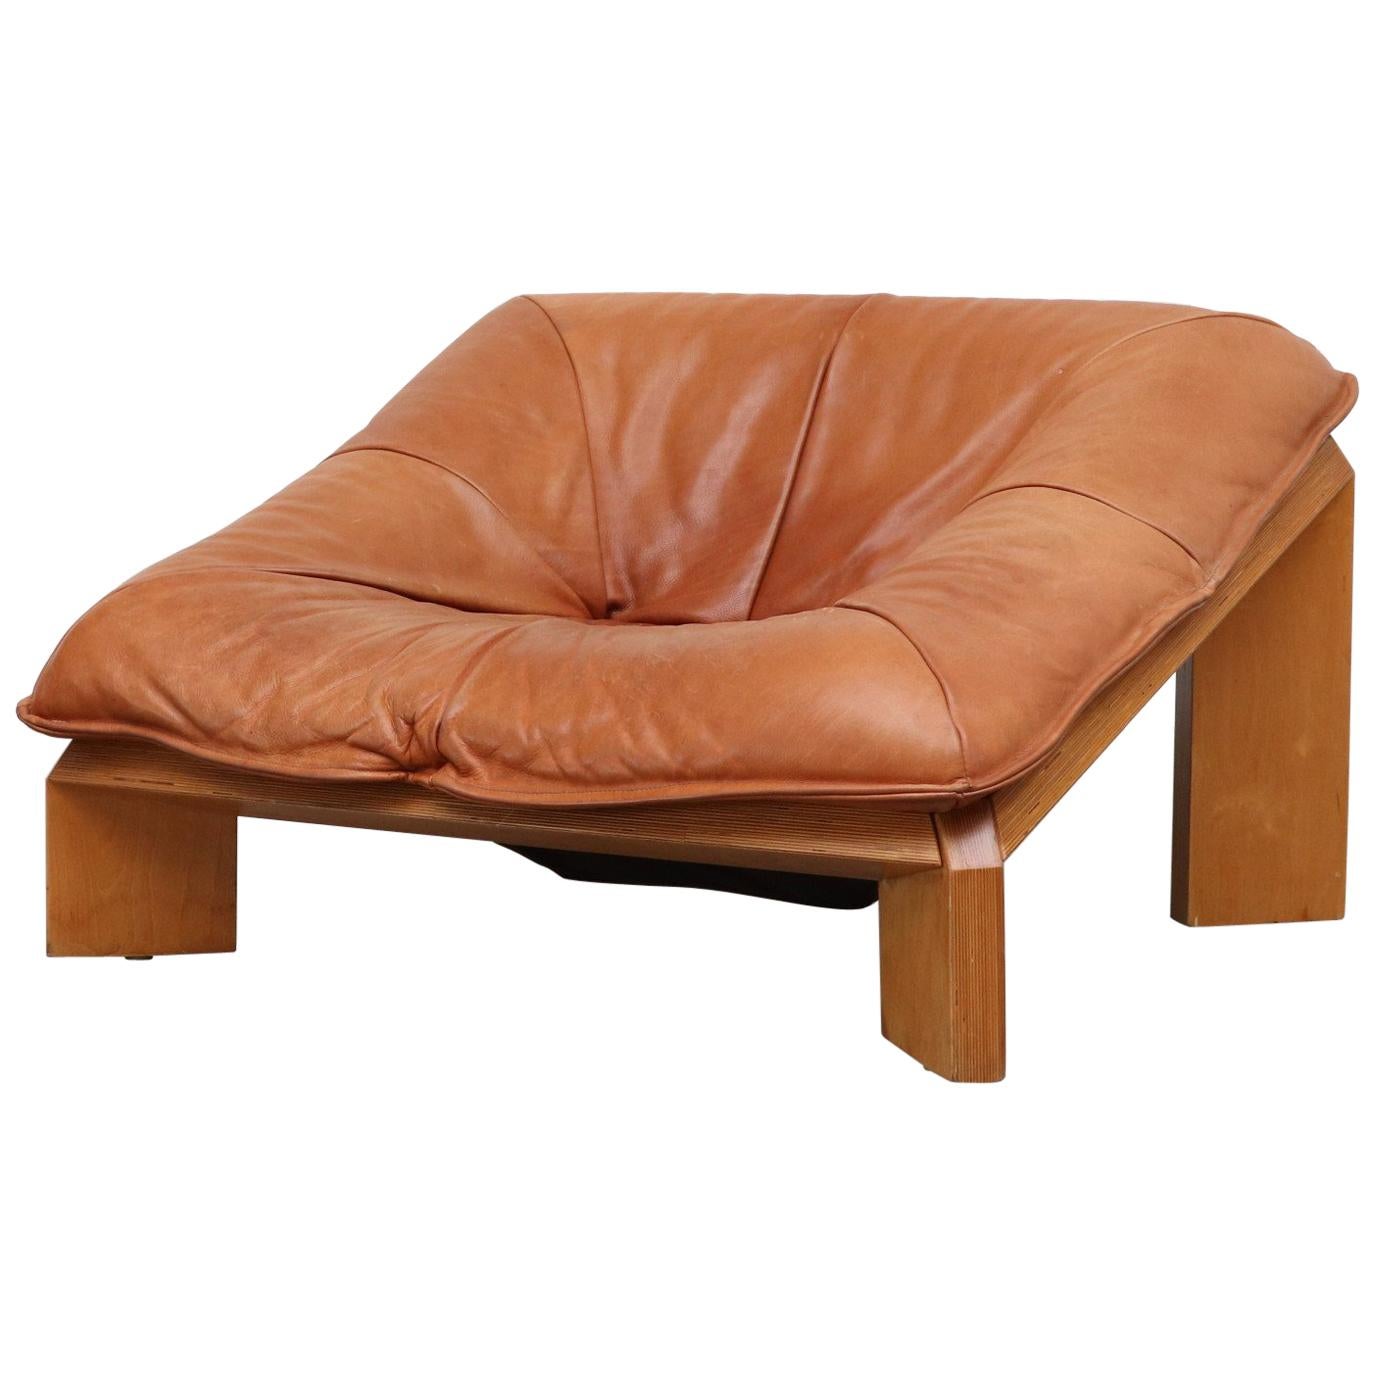 Gerard Van Den Berg "Oslo" Lounge Chair for Montis